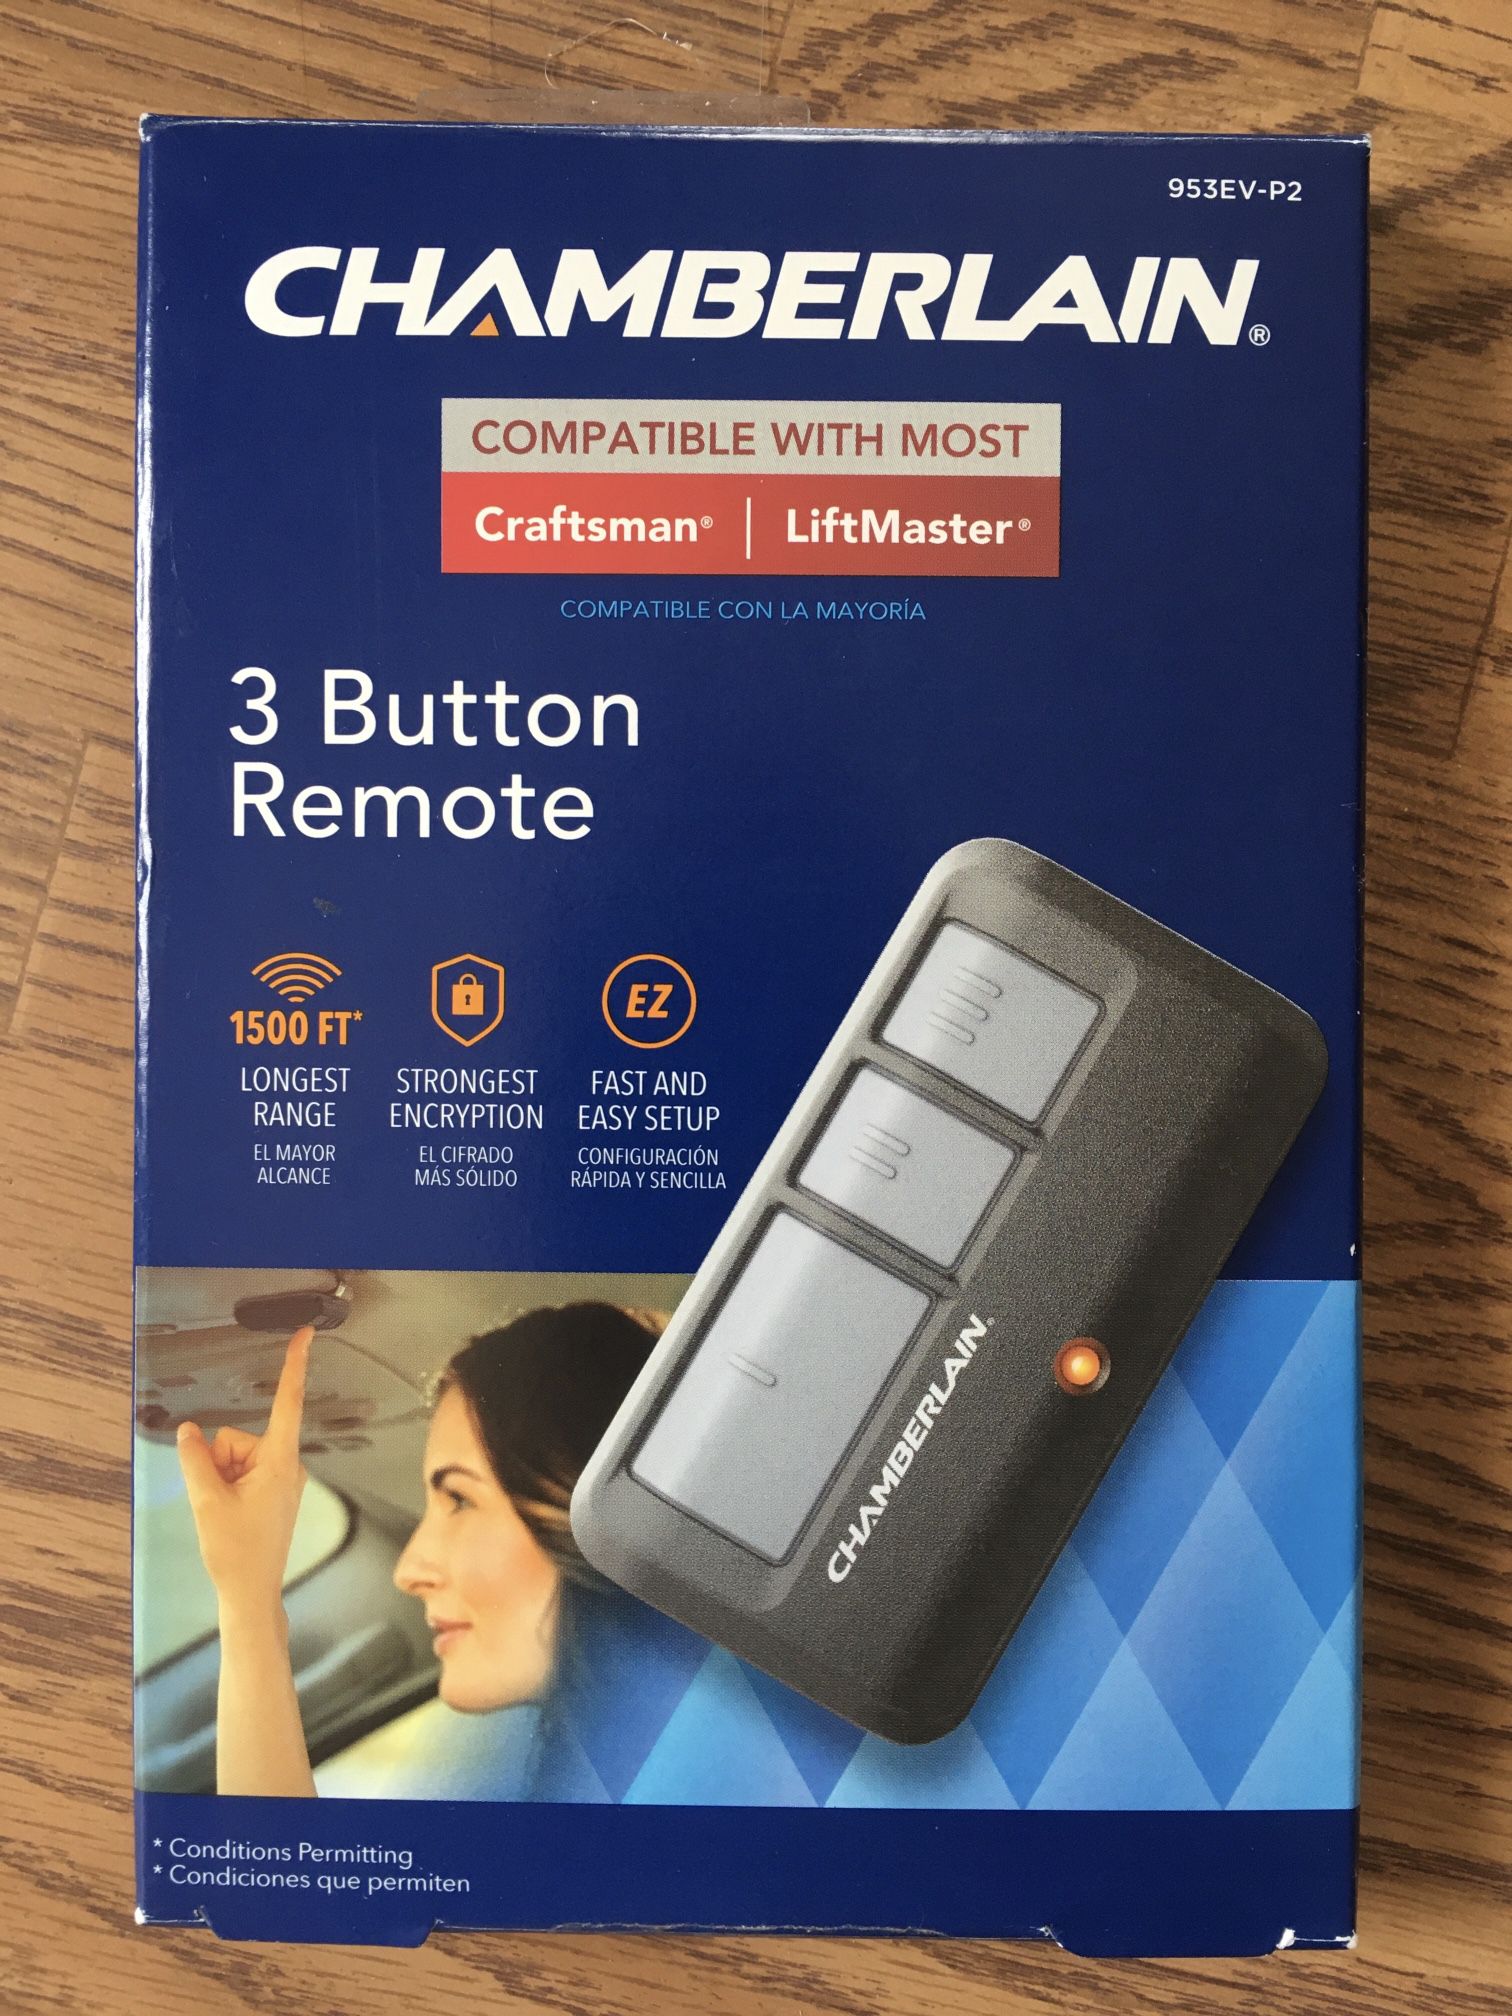 Chamberlain Liftmaster Craftsman Garage Door Remote